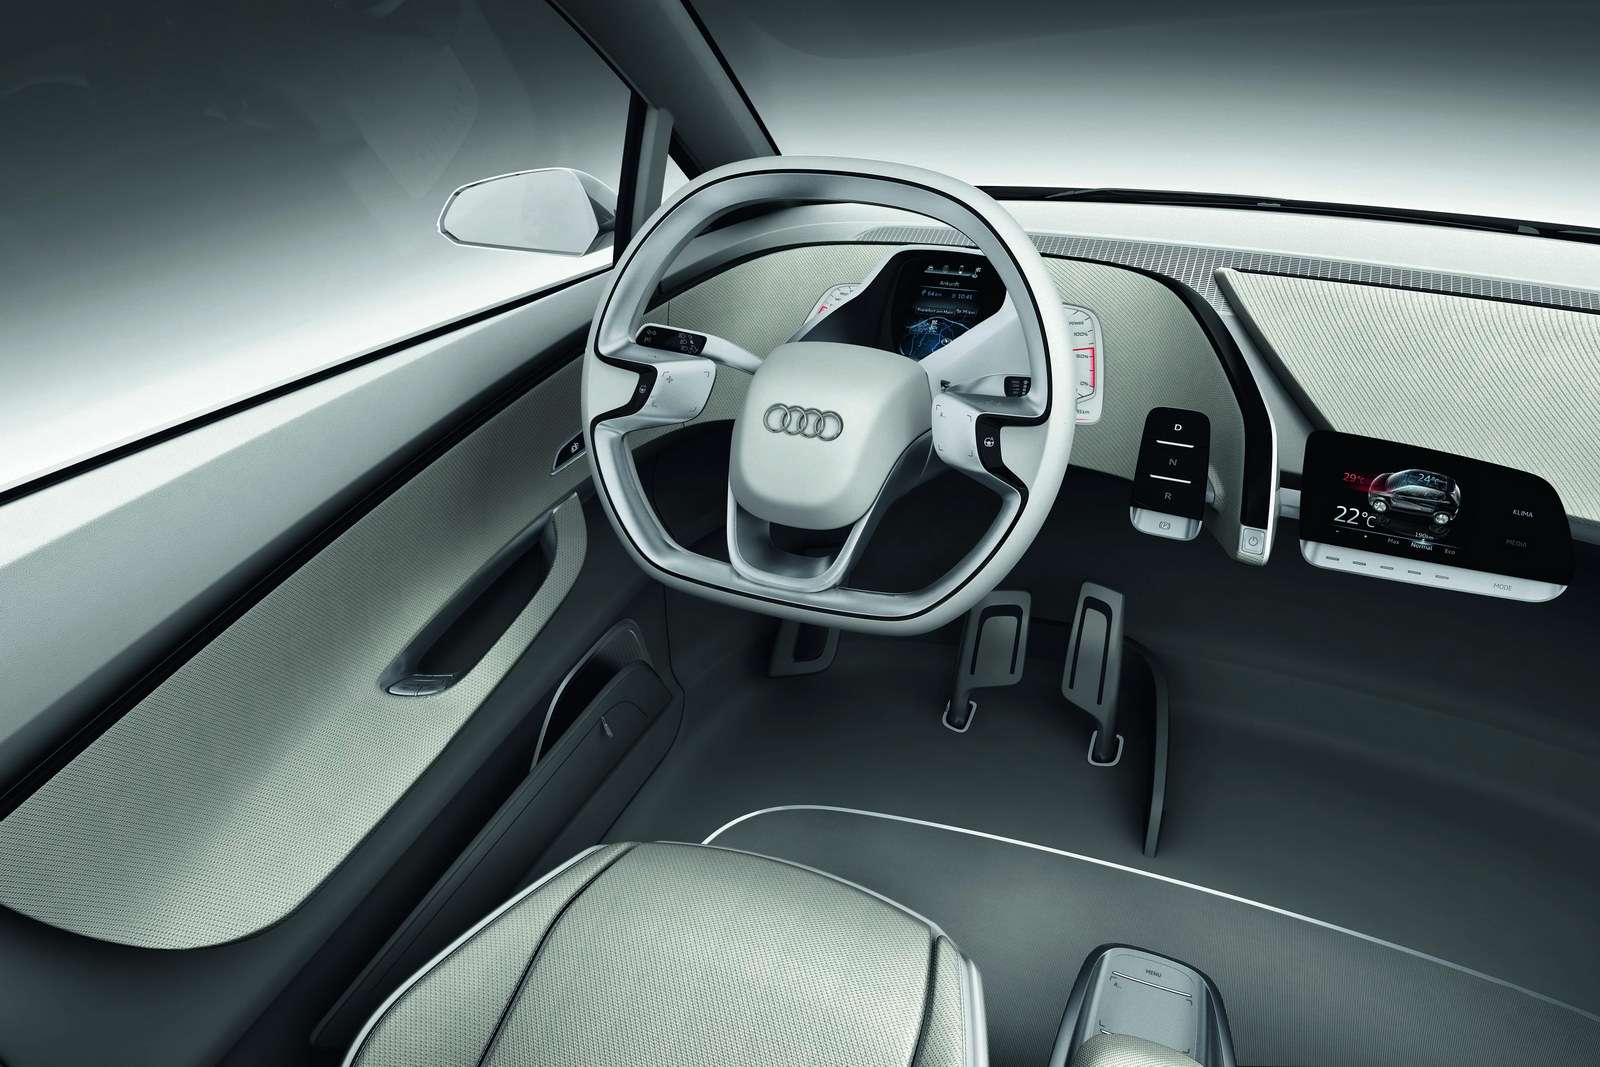 Audi A2 Concept first photo wrzesien 2011